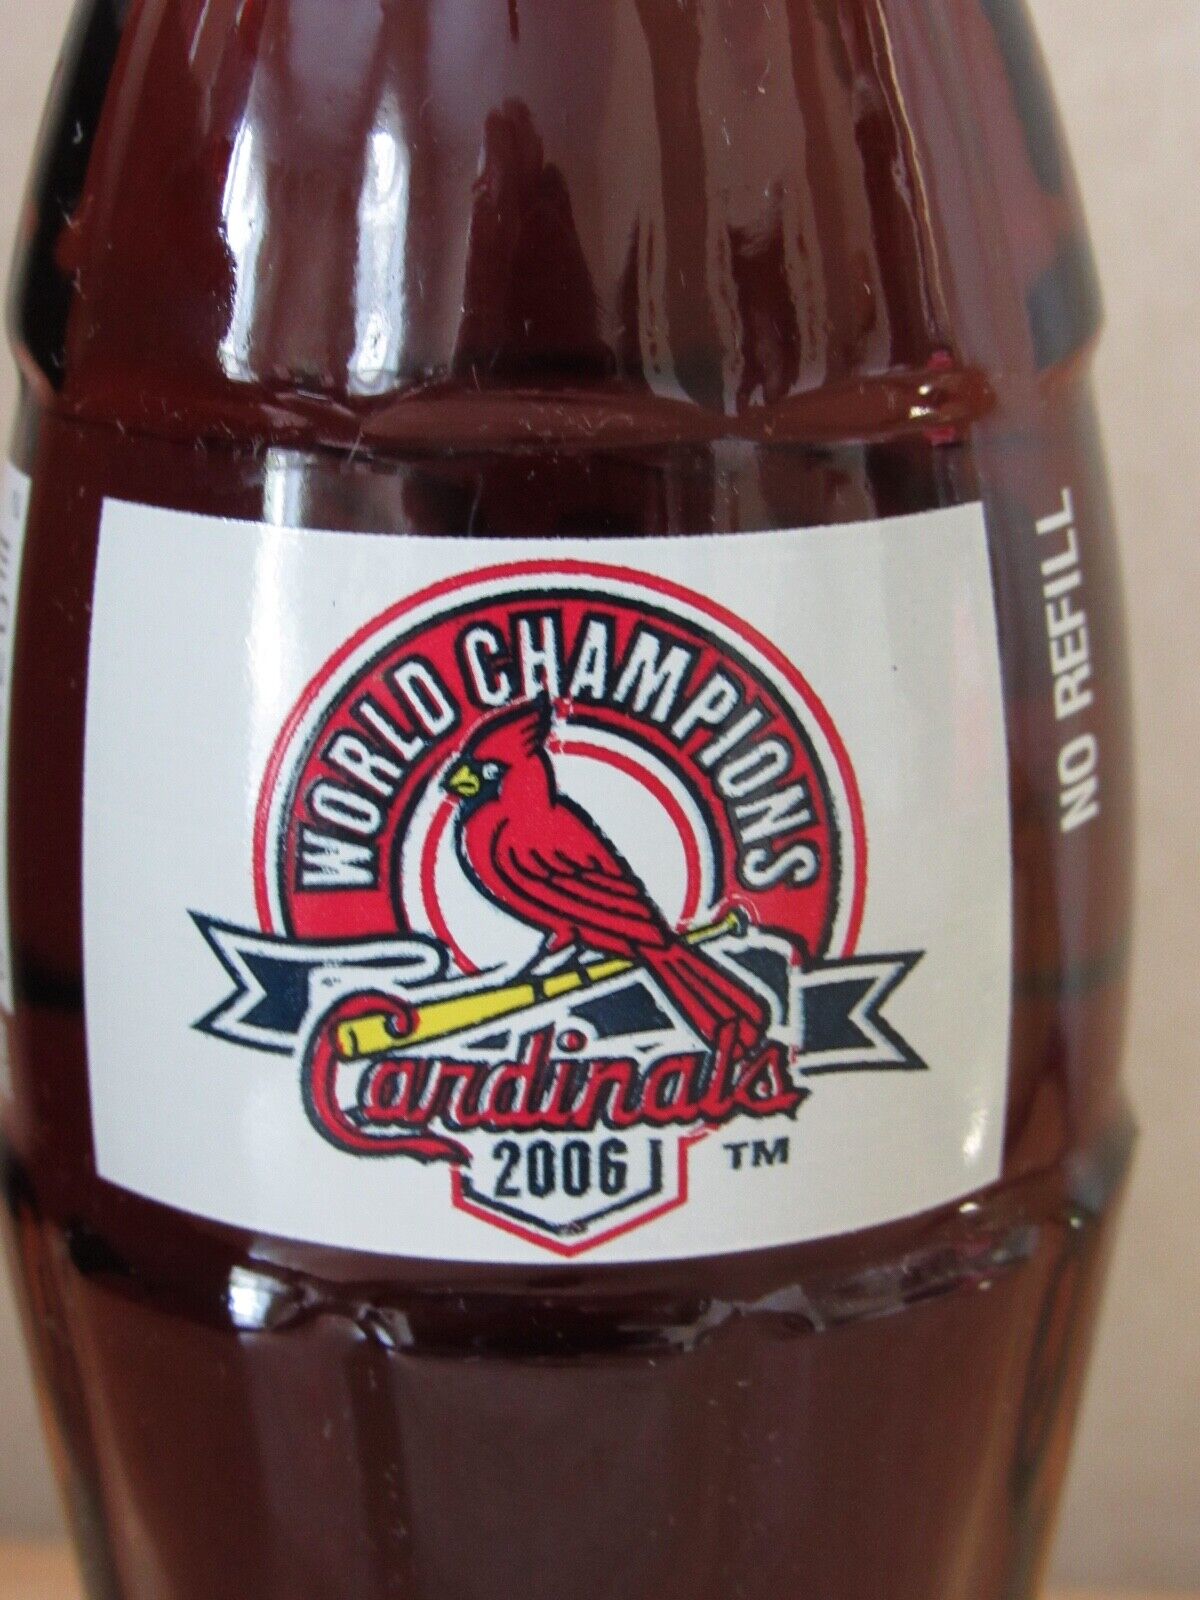 ST. LOUIS CARDINALS - Coca Cola Bottle - 2006 World Series Champions